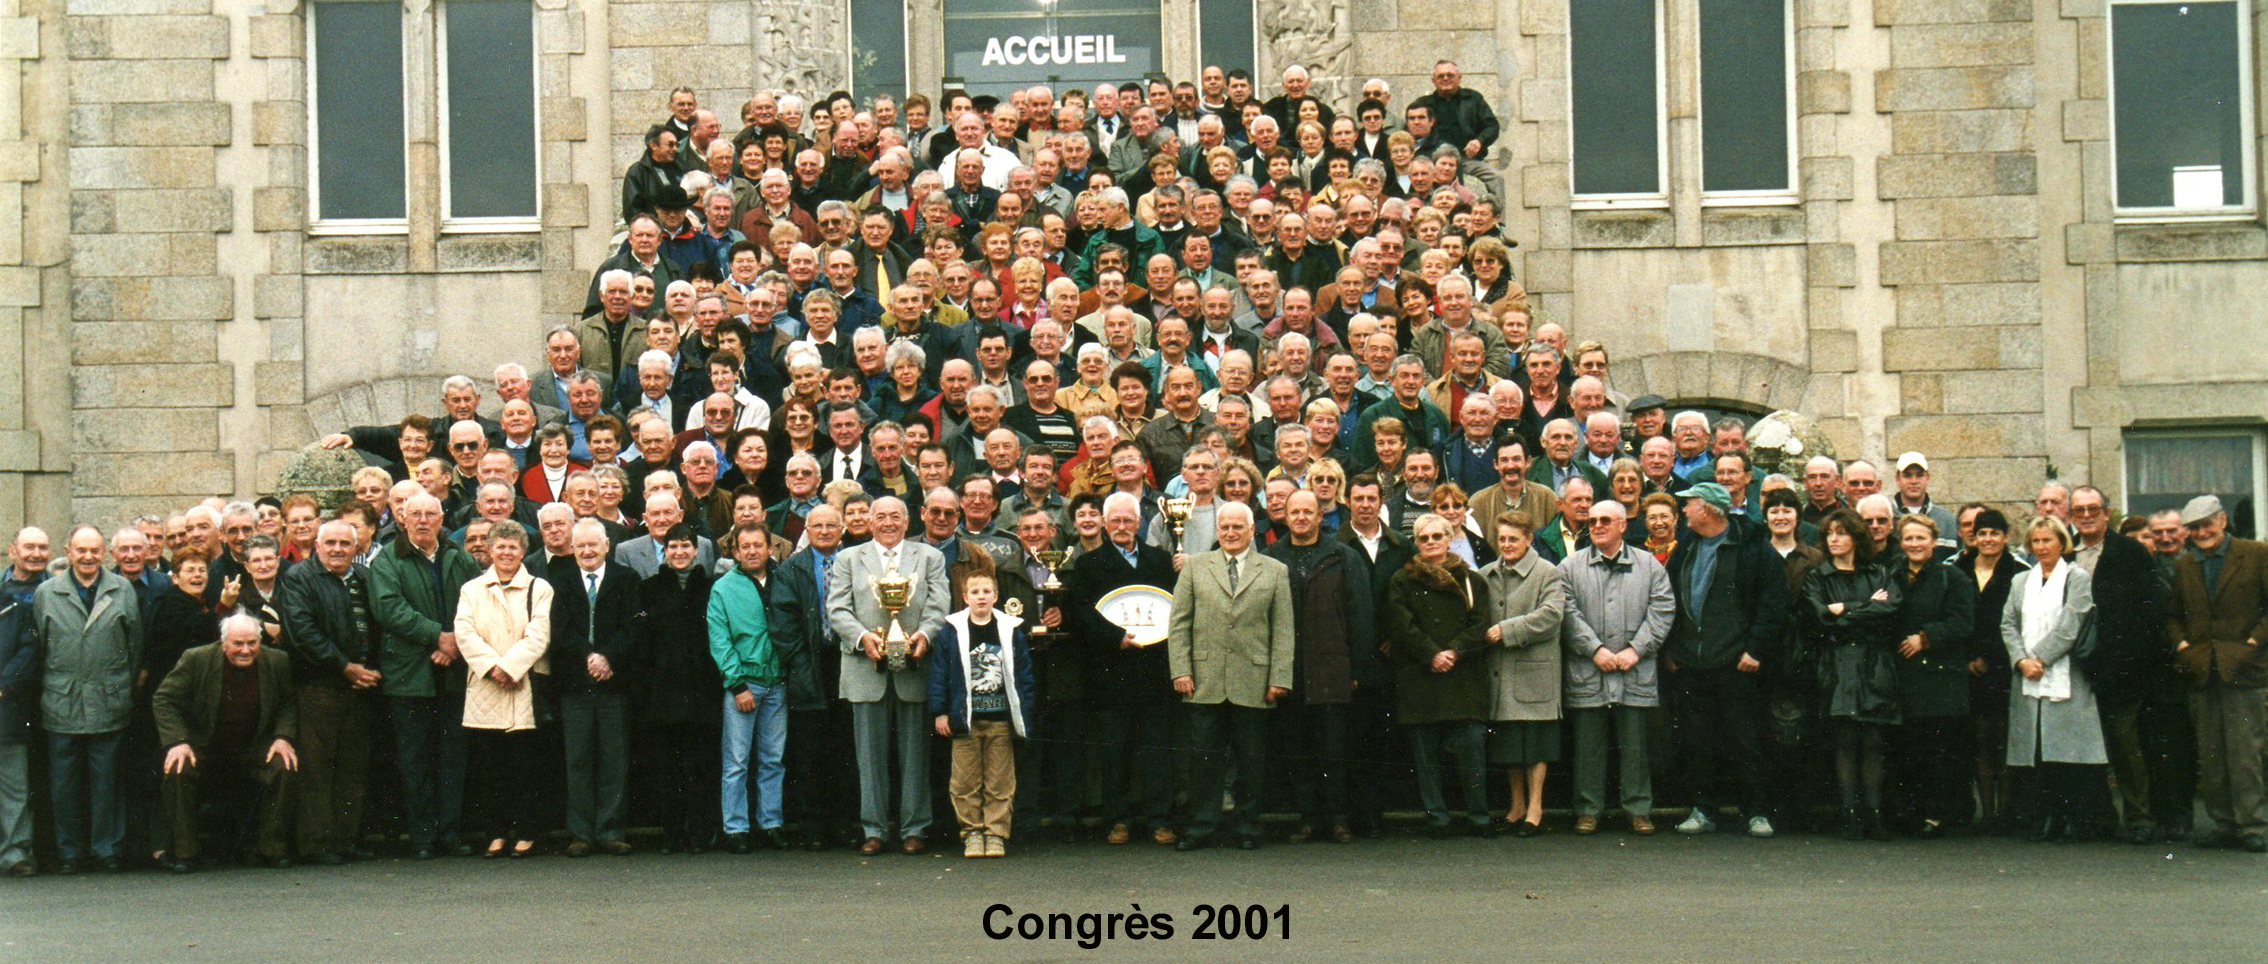 congrs 2001